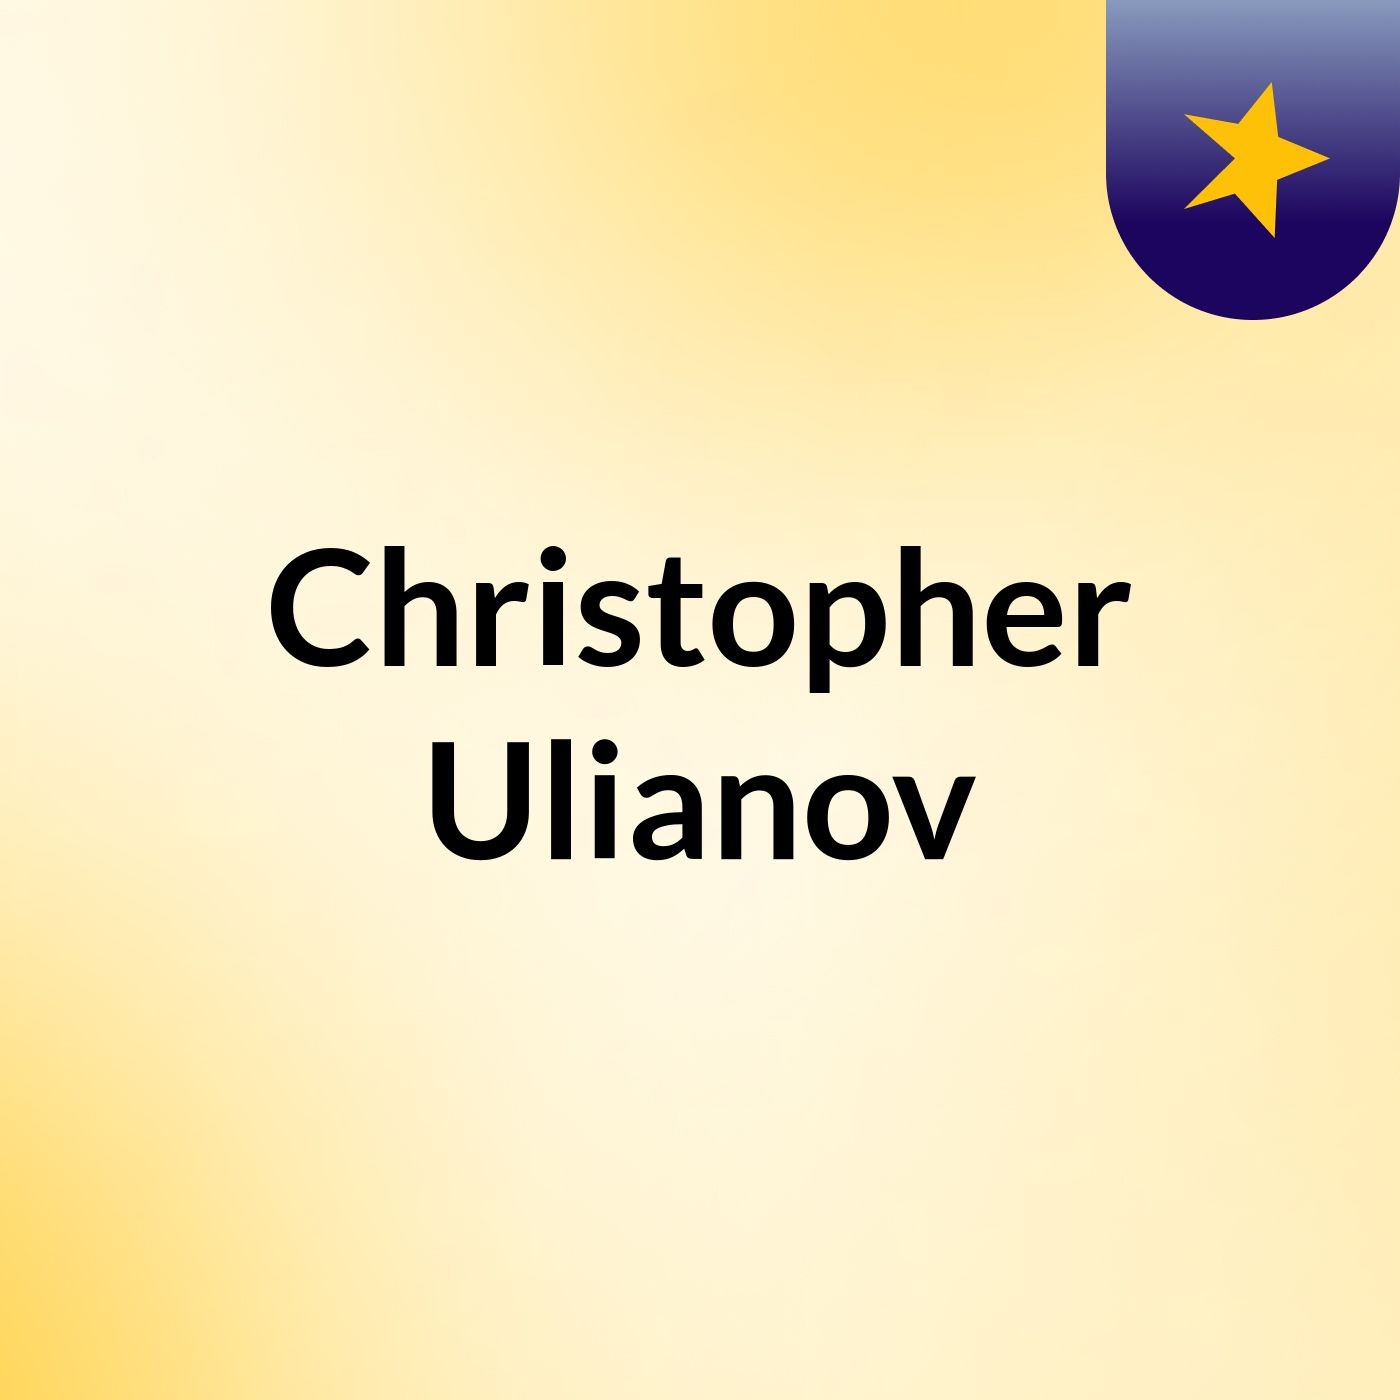 Christopher Ulianov